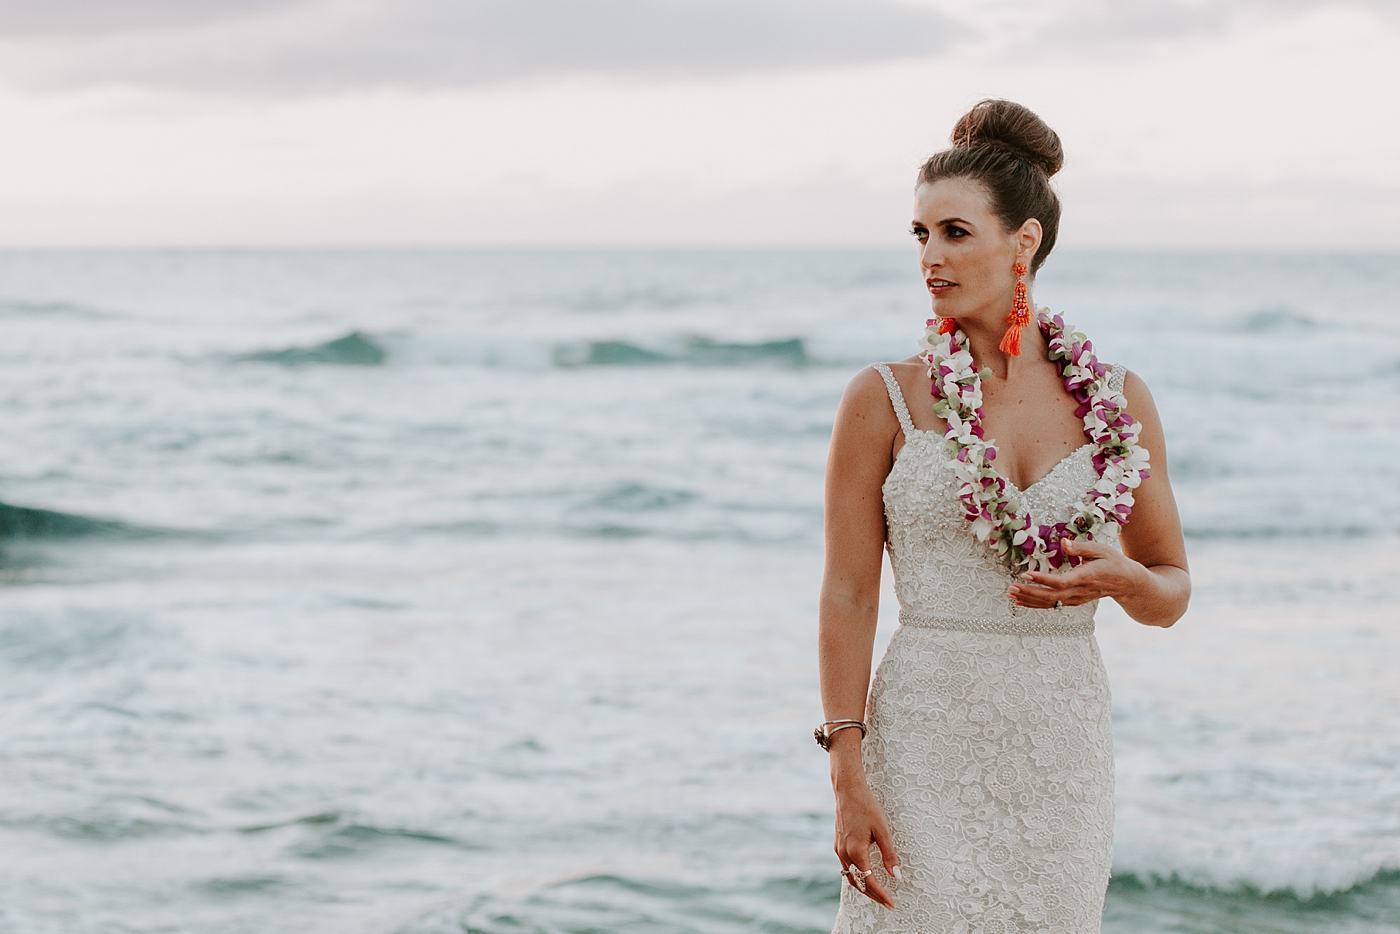 How to Plan Elopement Wedding in Kauai, Hawaii